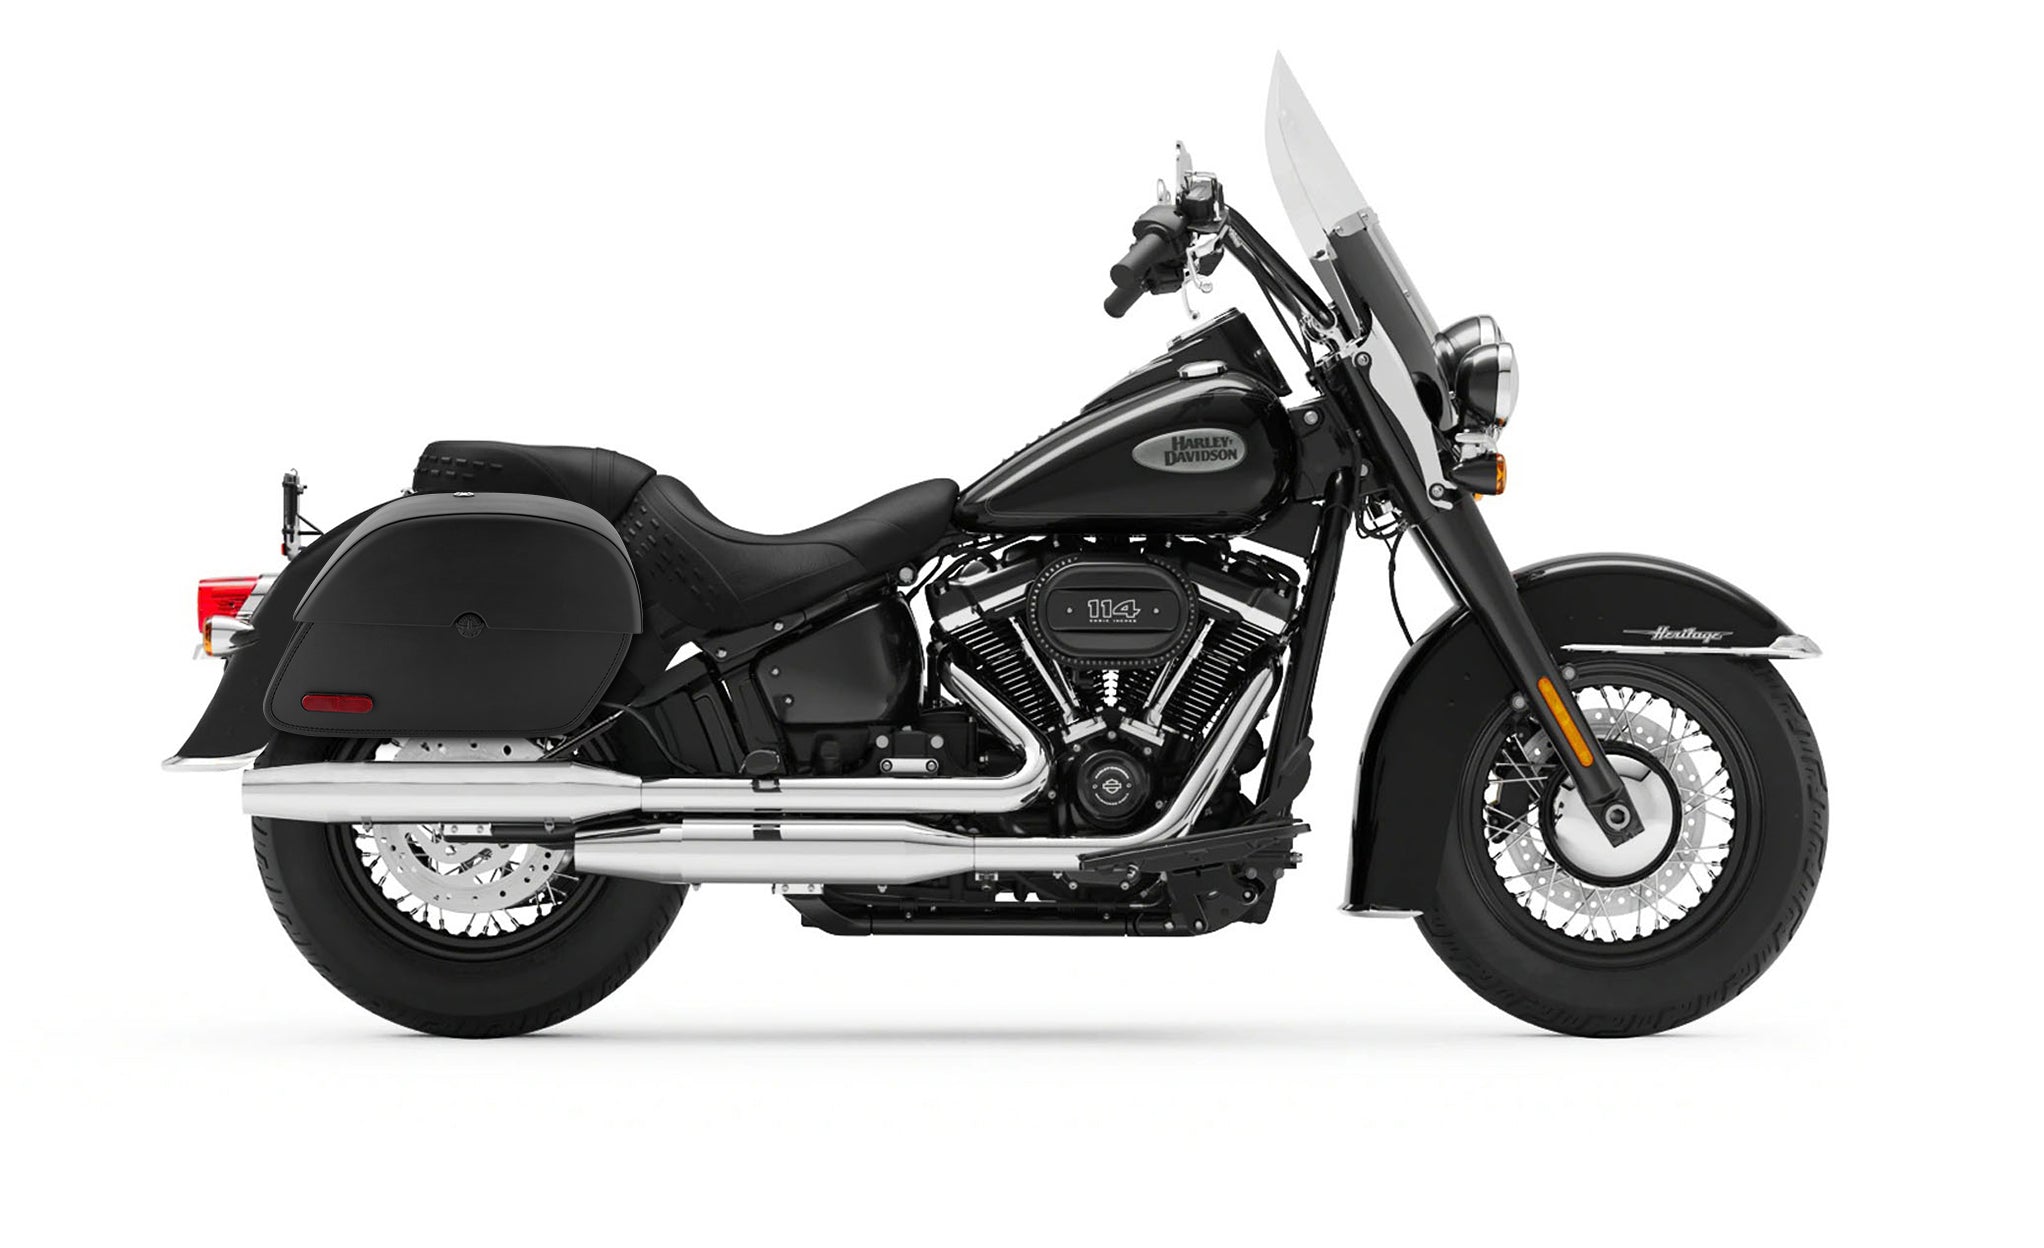 Viking Panzer Medium Leather Motorcycle Saddlebags For Harley Davidson Softail Heritage Flst I C Ci Engineering Excellence with Bag on Bike @expand